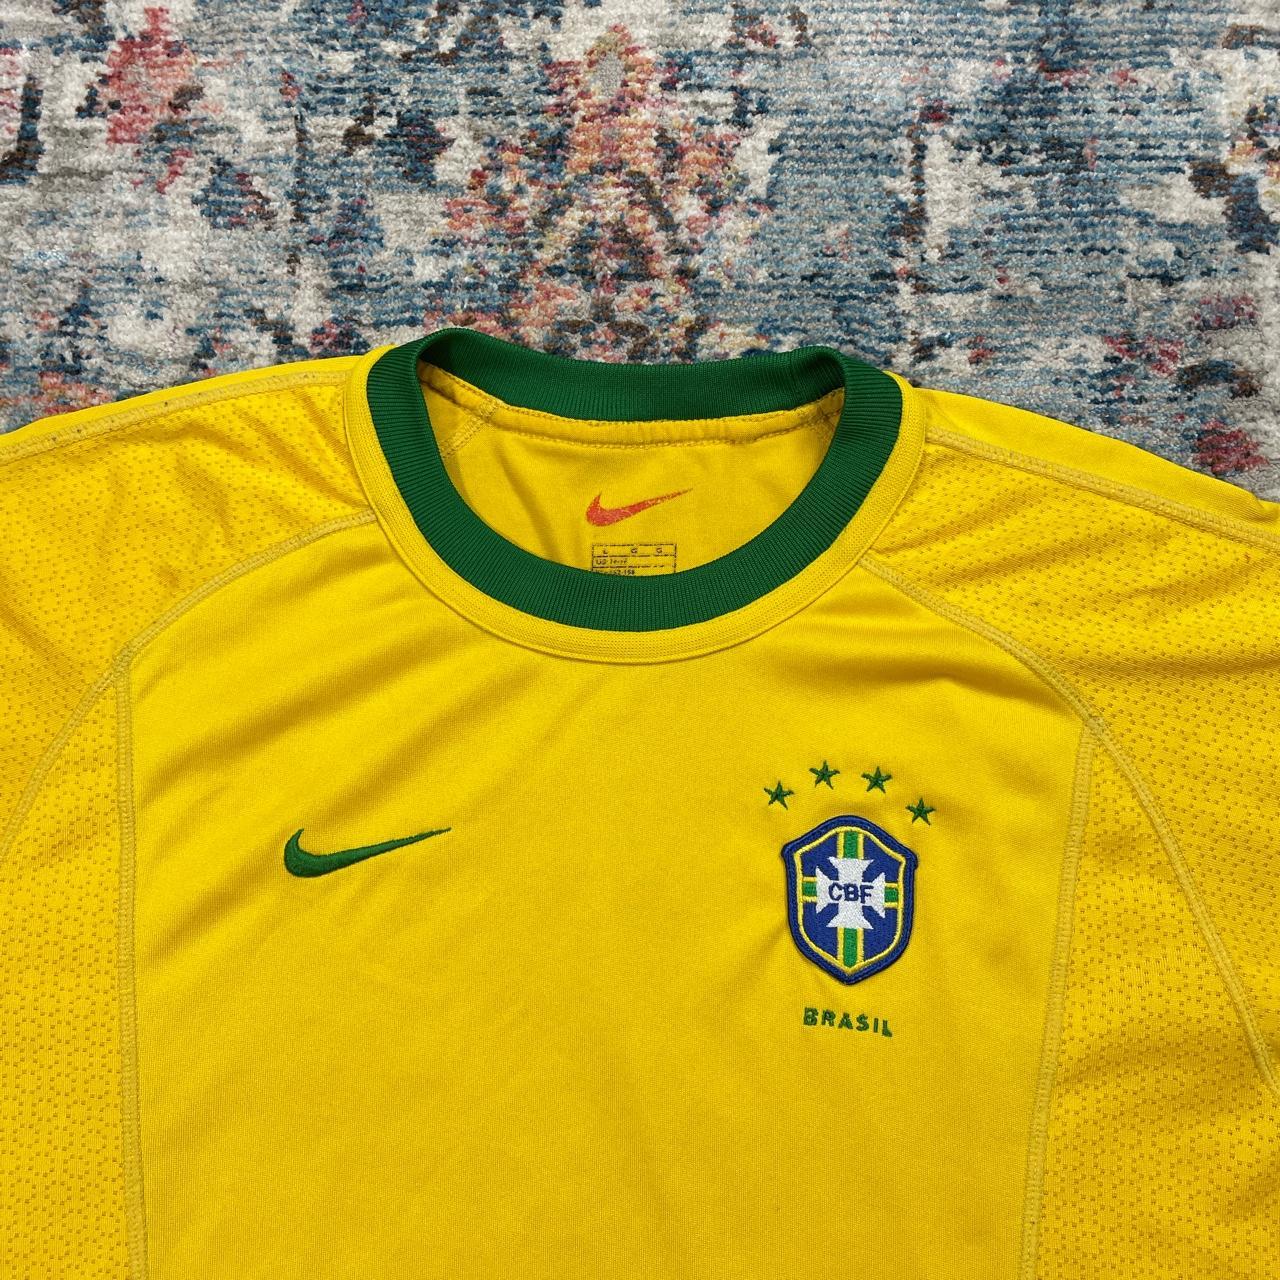 Nike Brazil 2000 home football shirt - Small Retro... - Depop